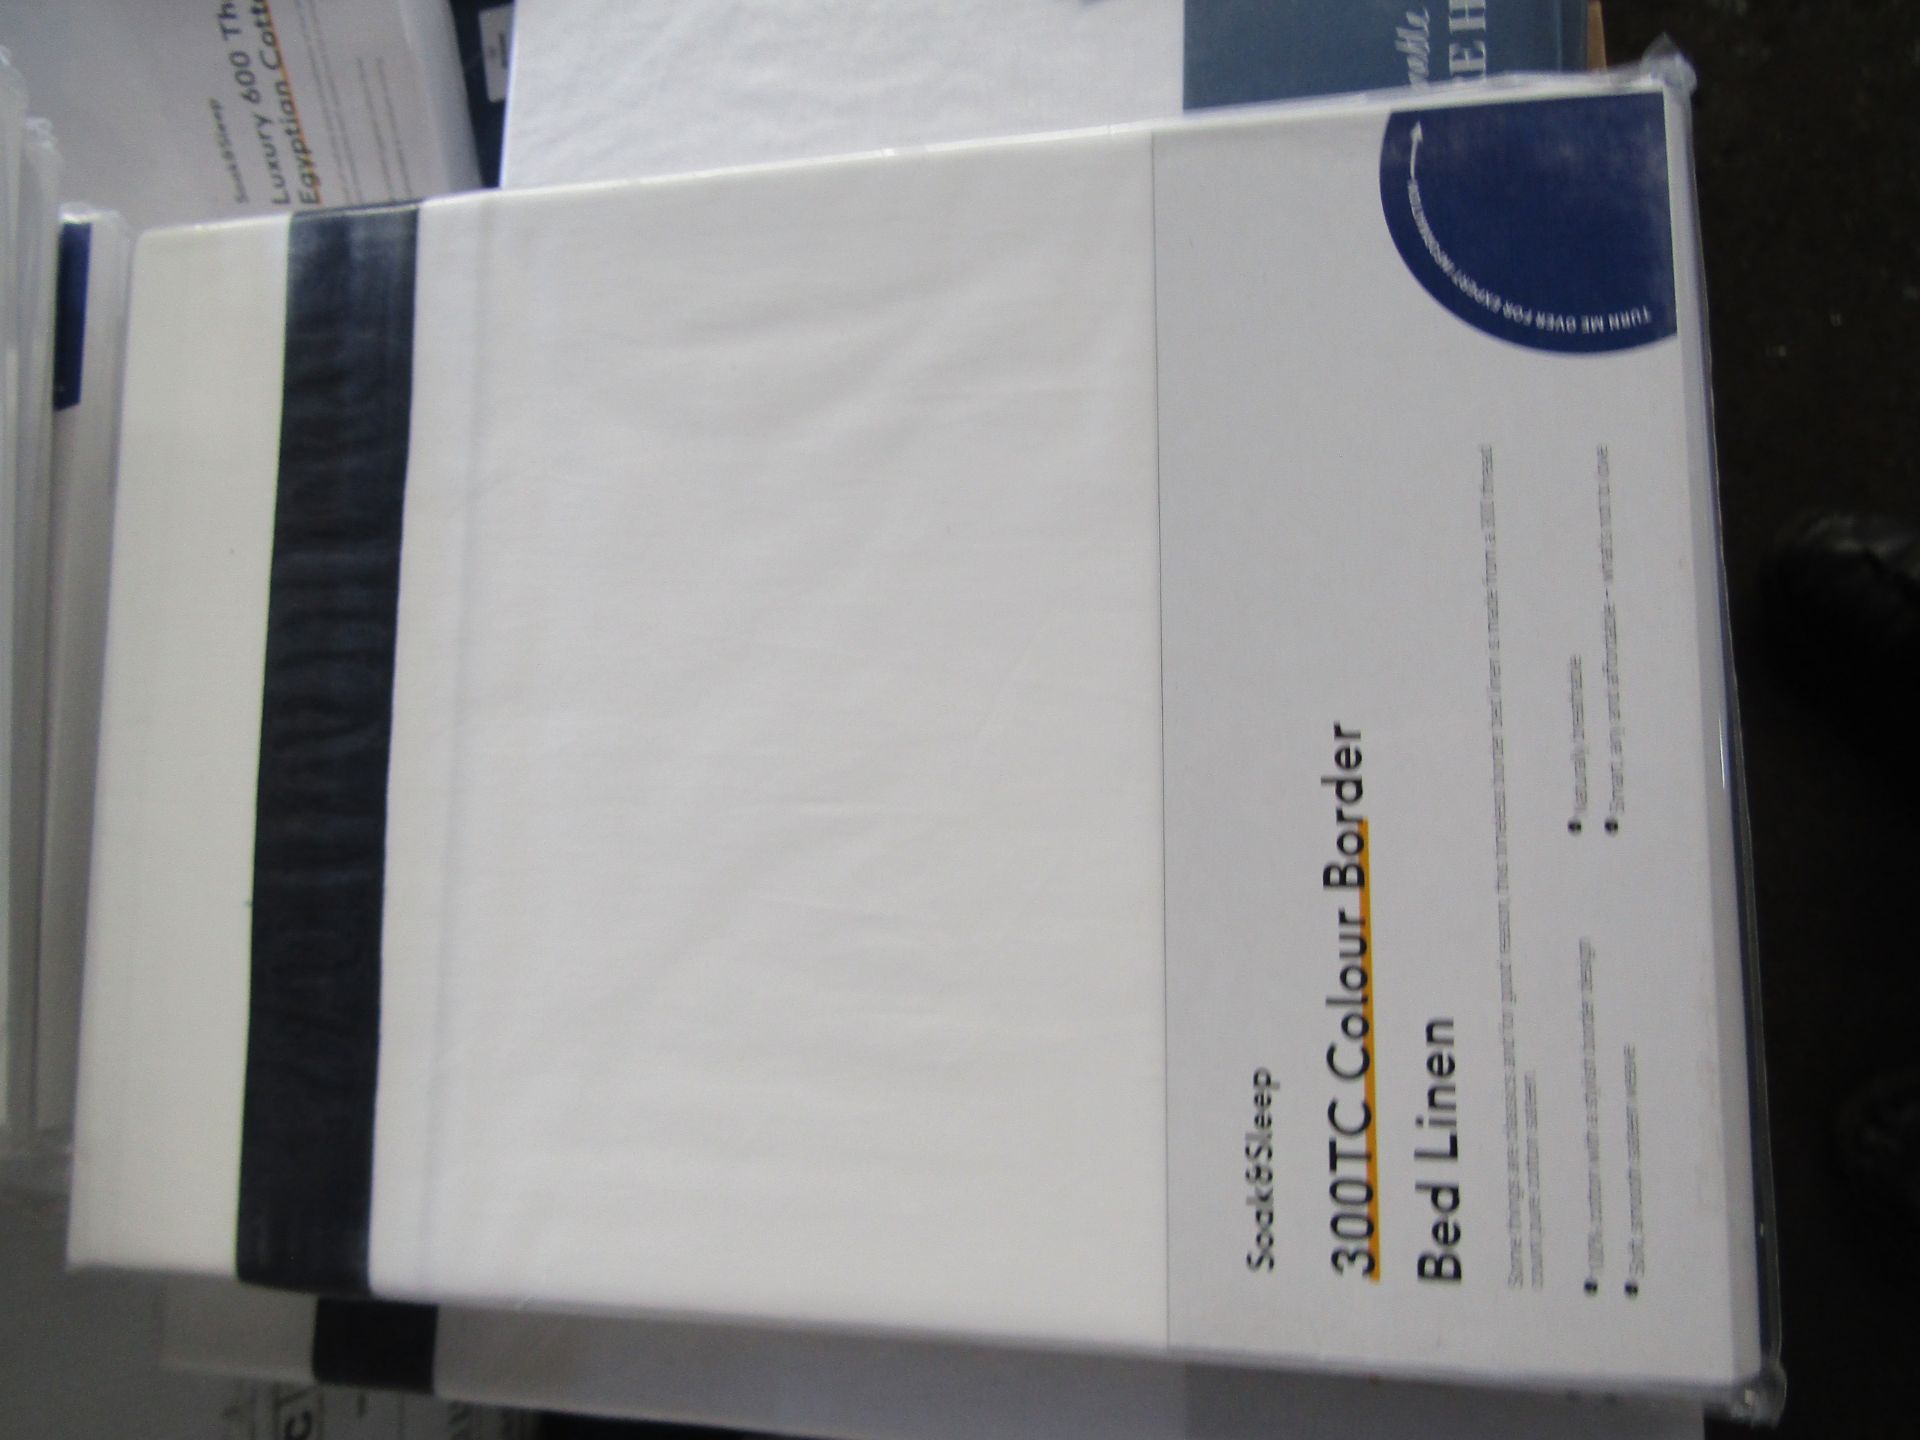 Soak & Sleep Soak & Sleep White/Navy 300TC Colour Border Cotton Single Flat Sheet RRP 17 - Image 2 of 2